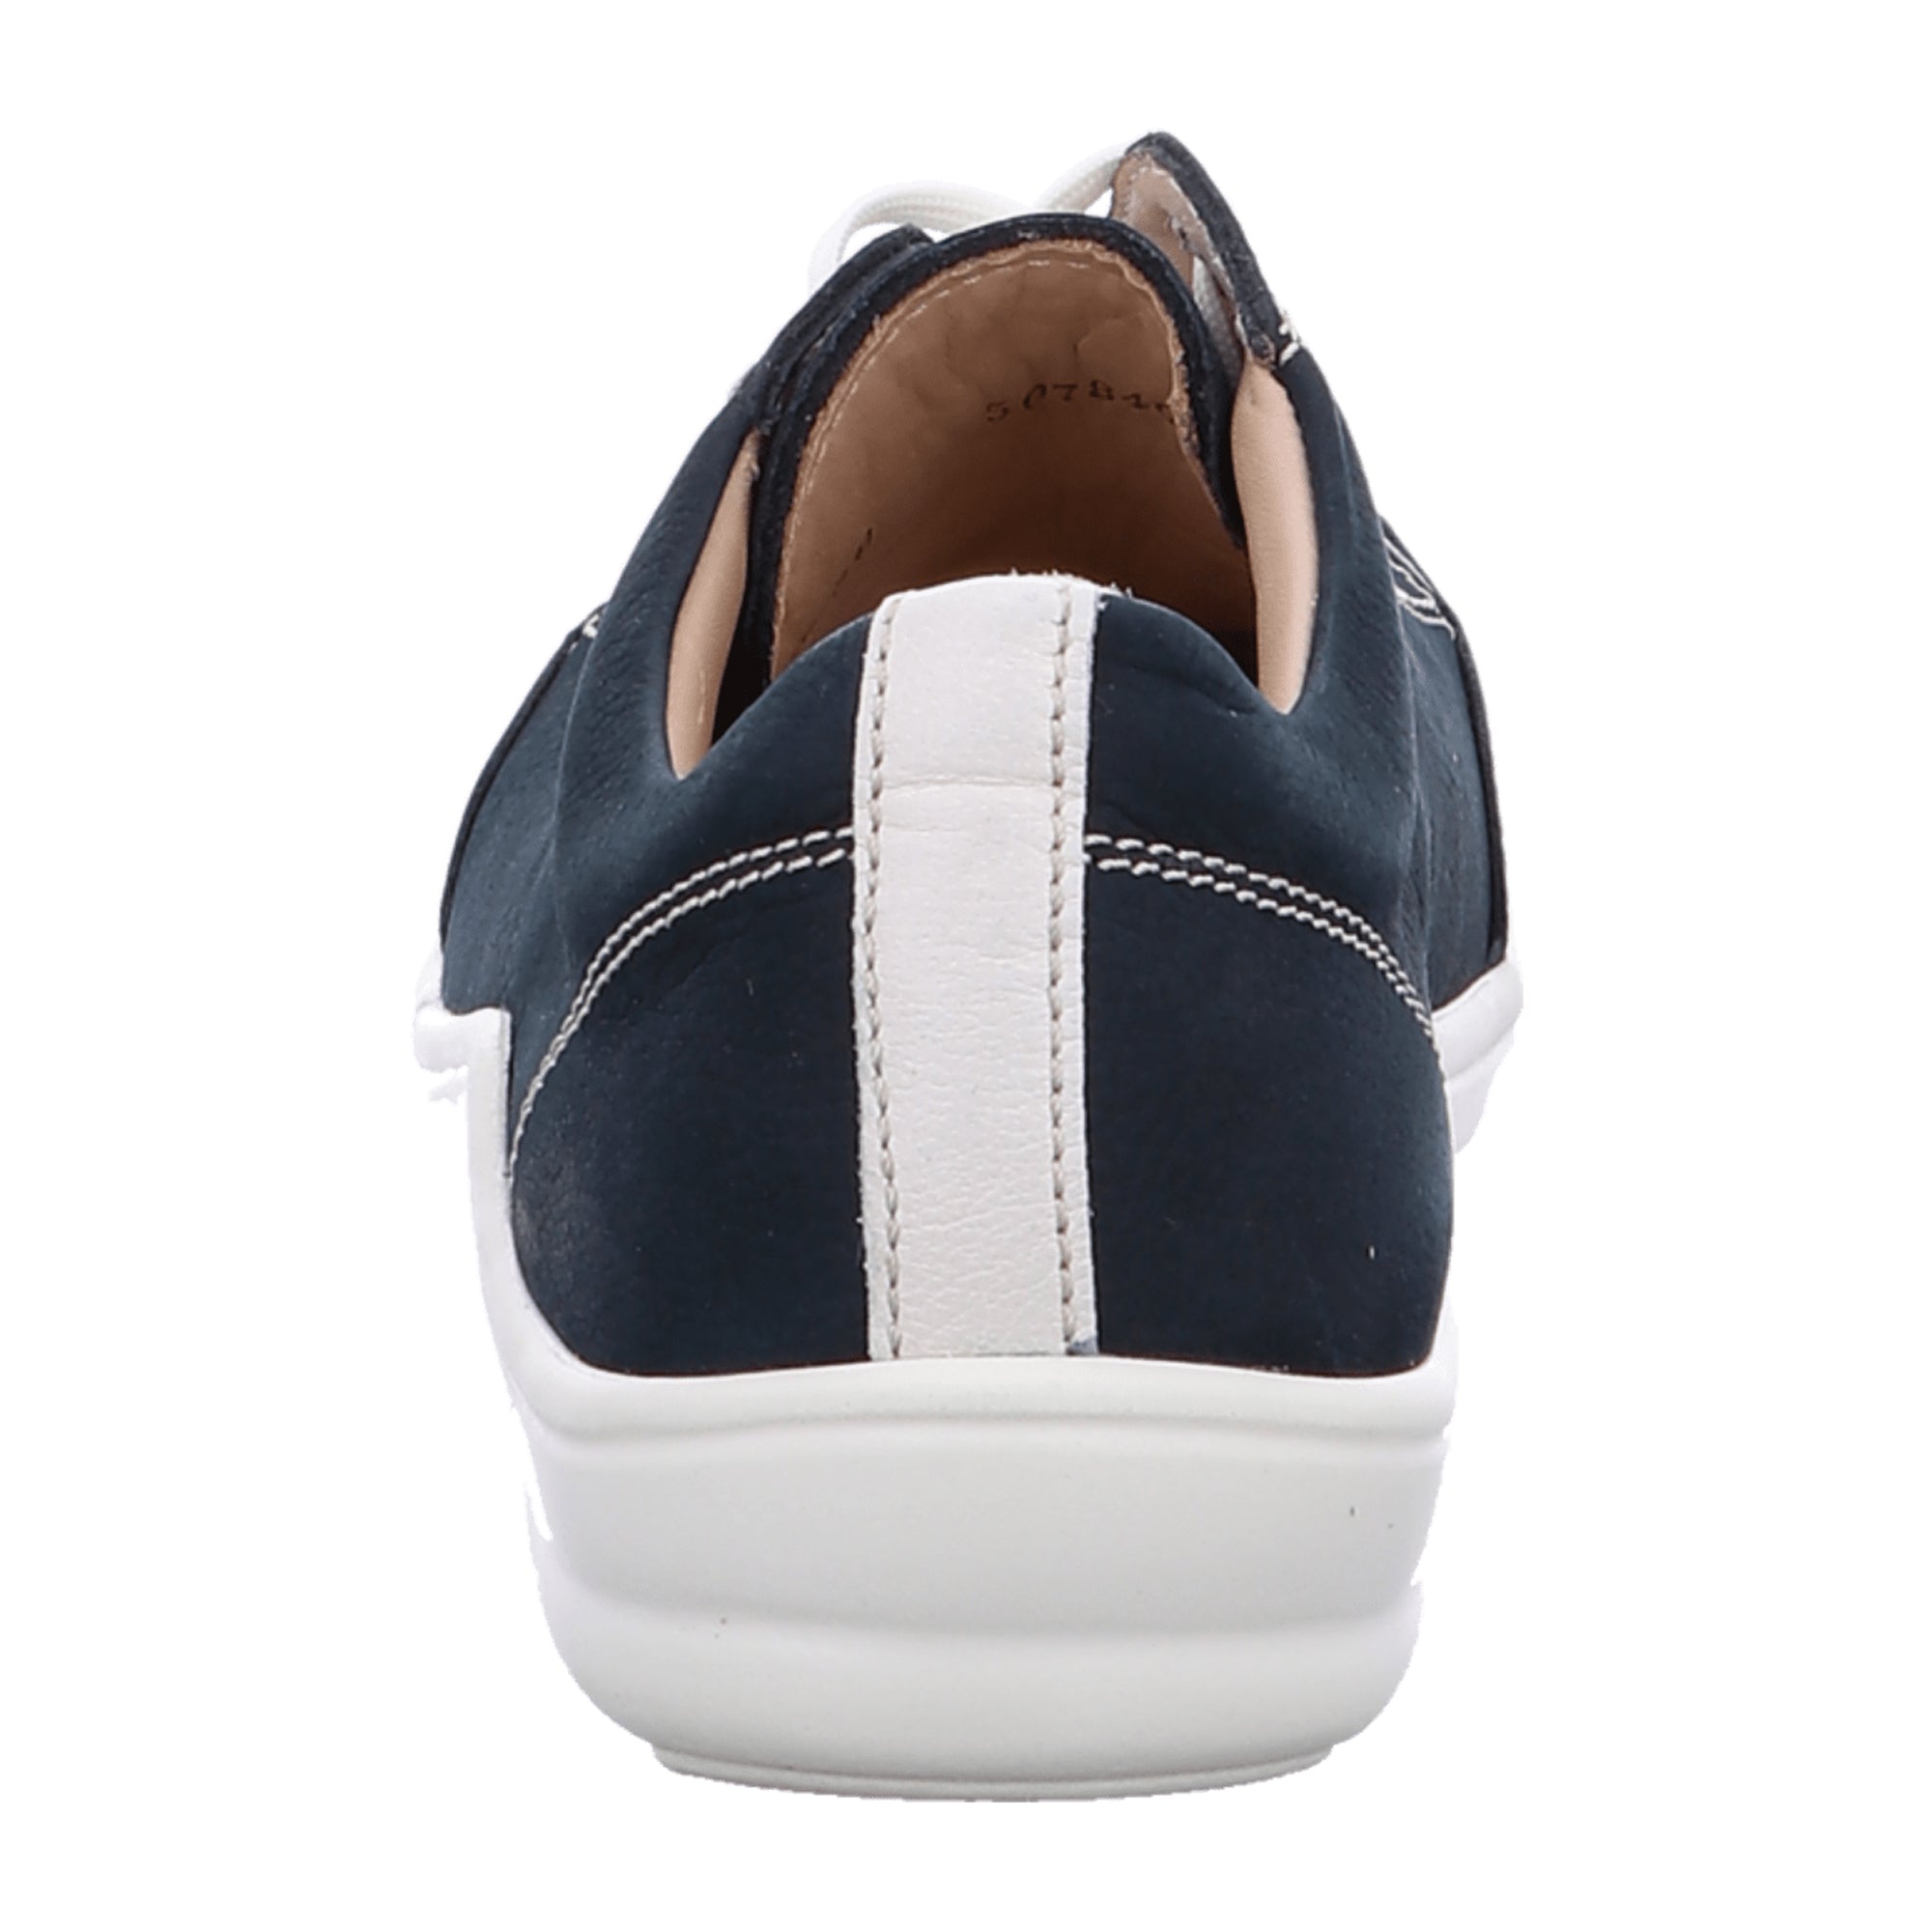 Finn Comfort Soho Women’s Blue Sneakers - Stylish & Comfortable